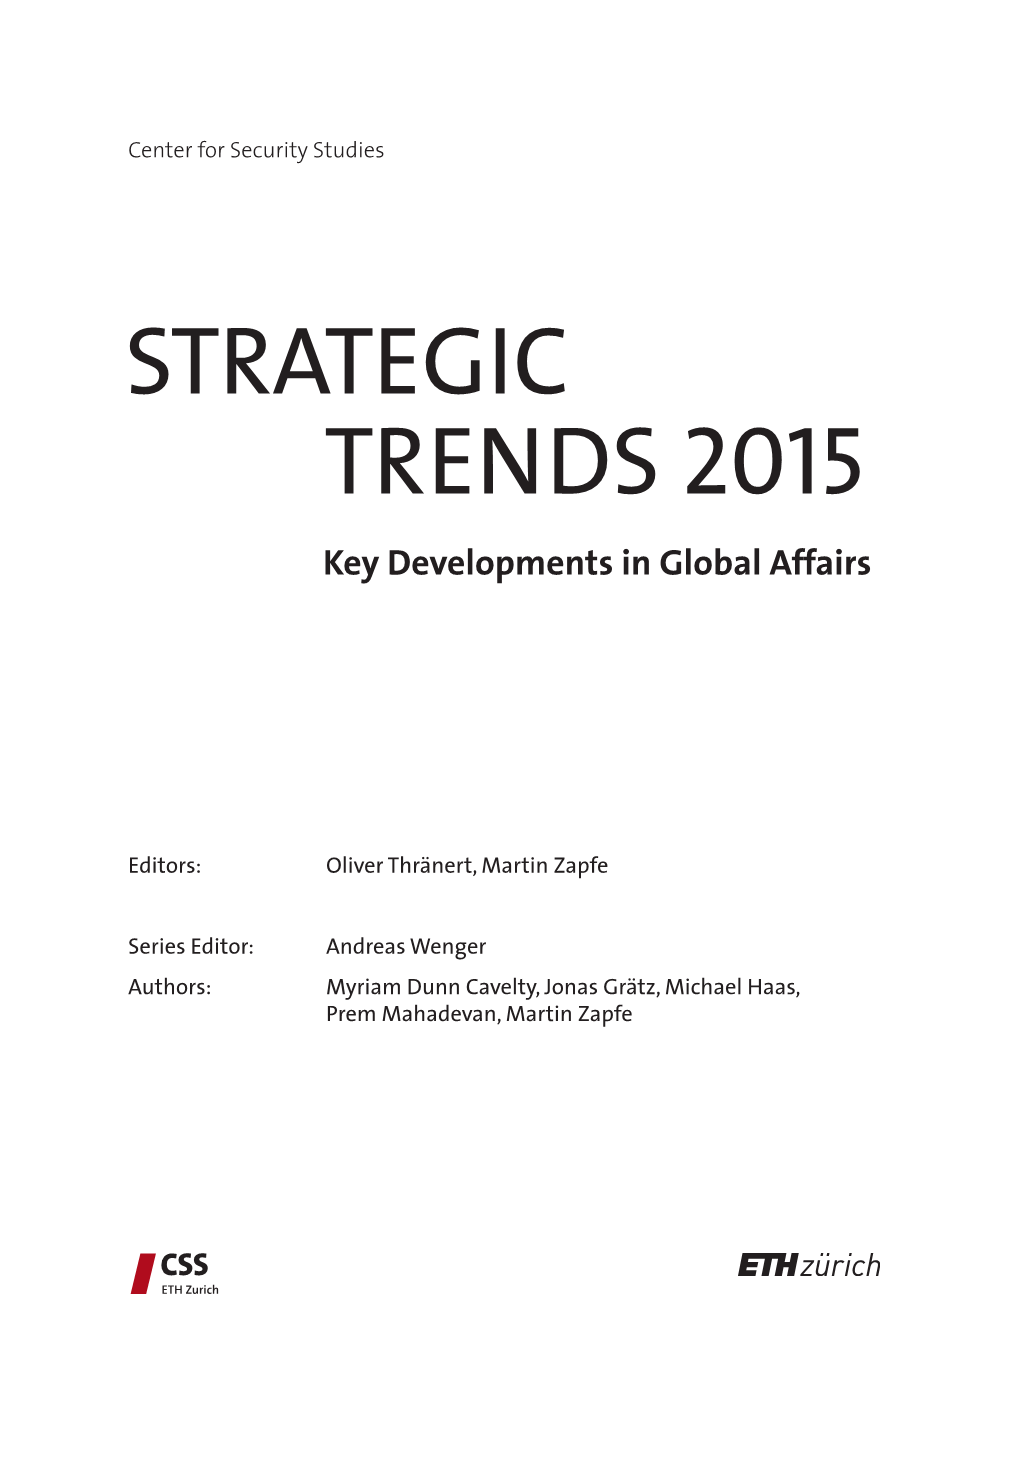 STRATEGIC TRENDS 2015 Key Developments in Global Affairs